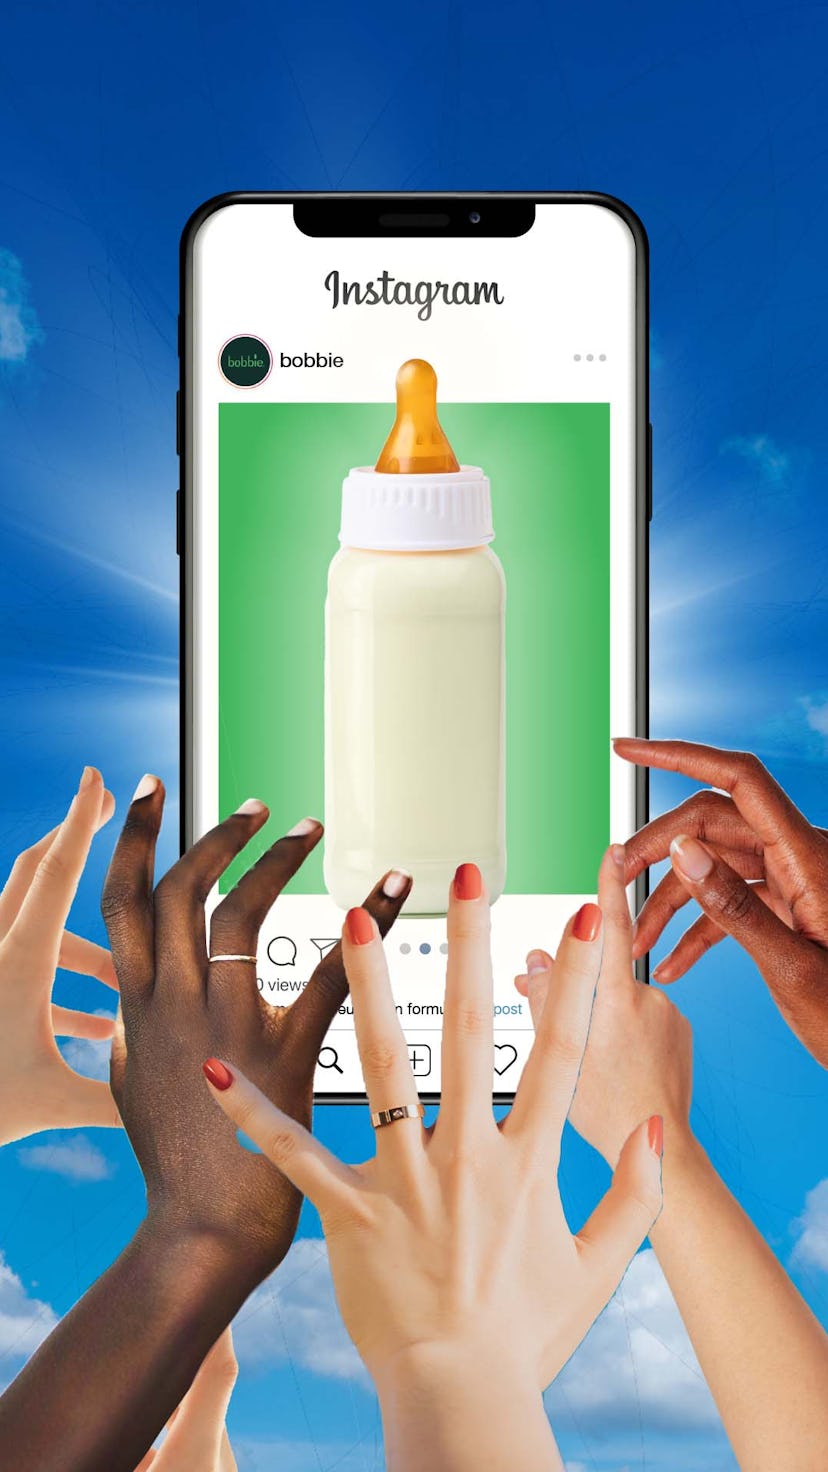 Bobbie formula on Instagram, hands reach toward it